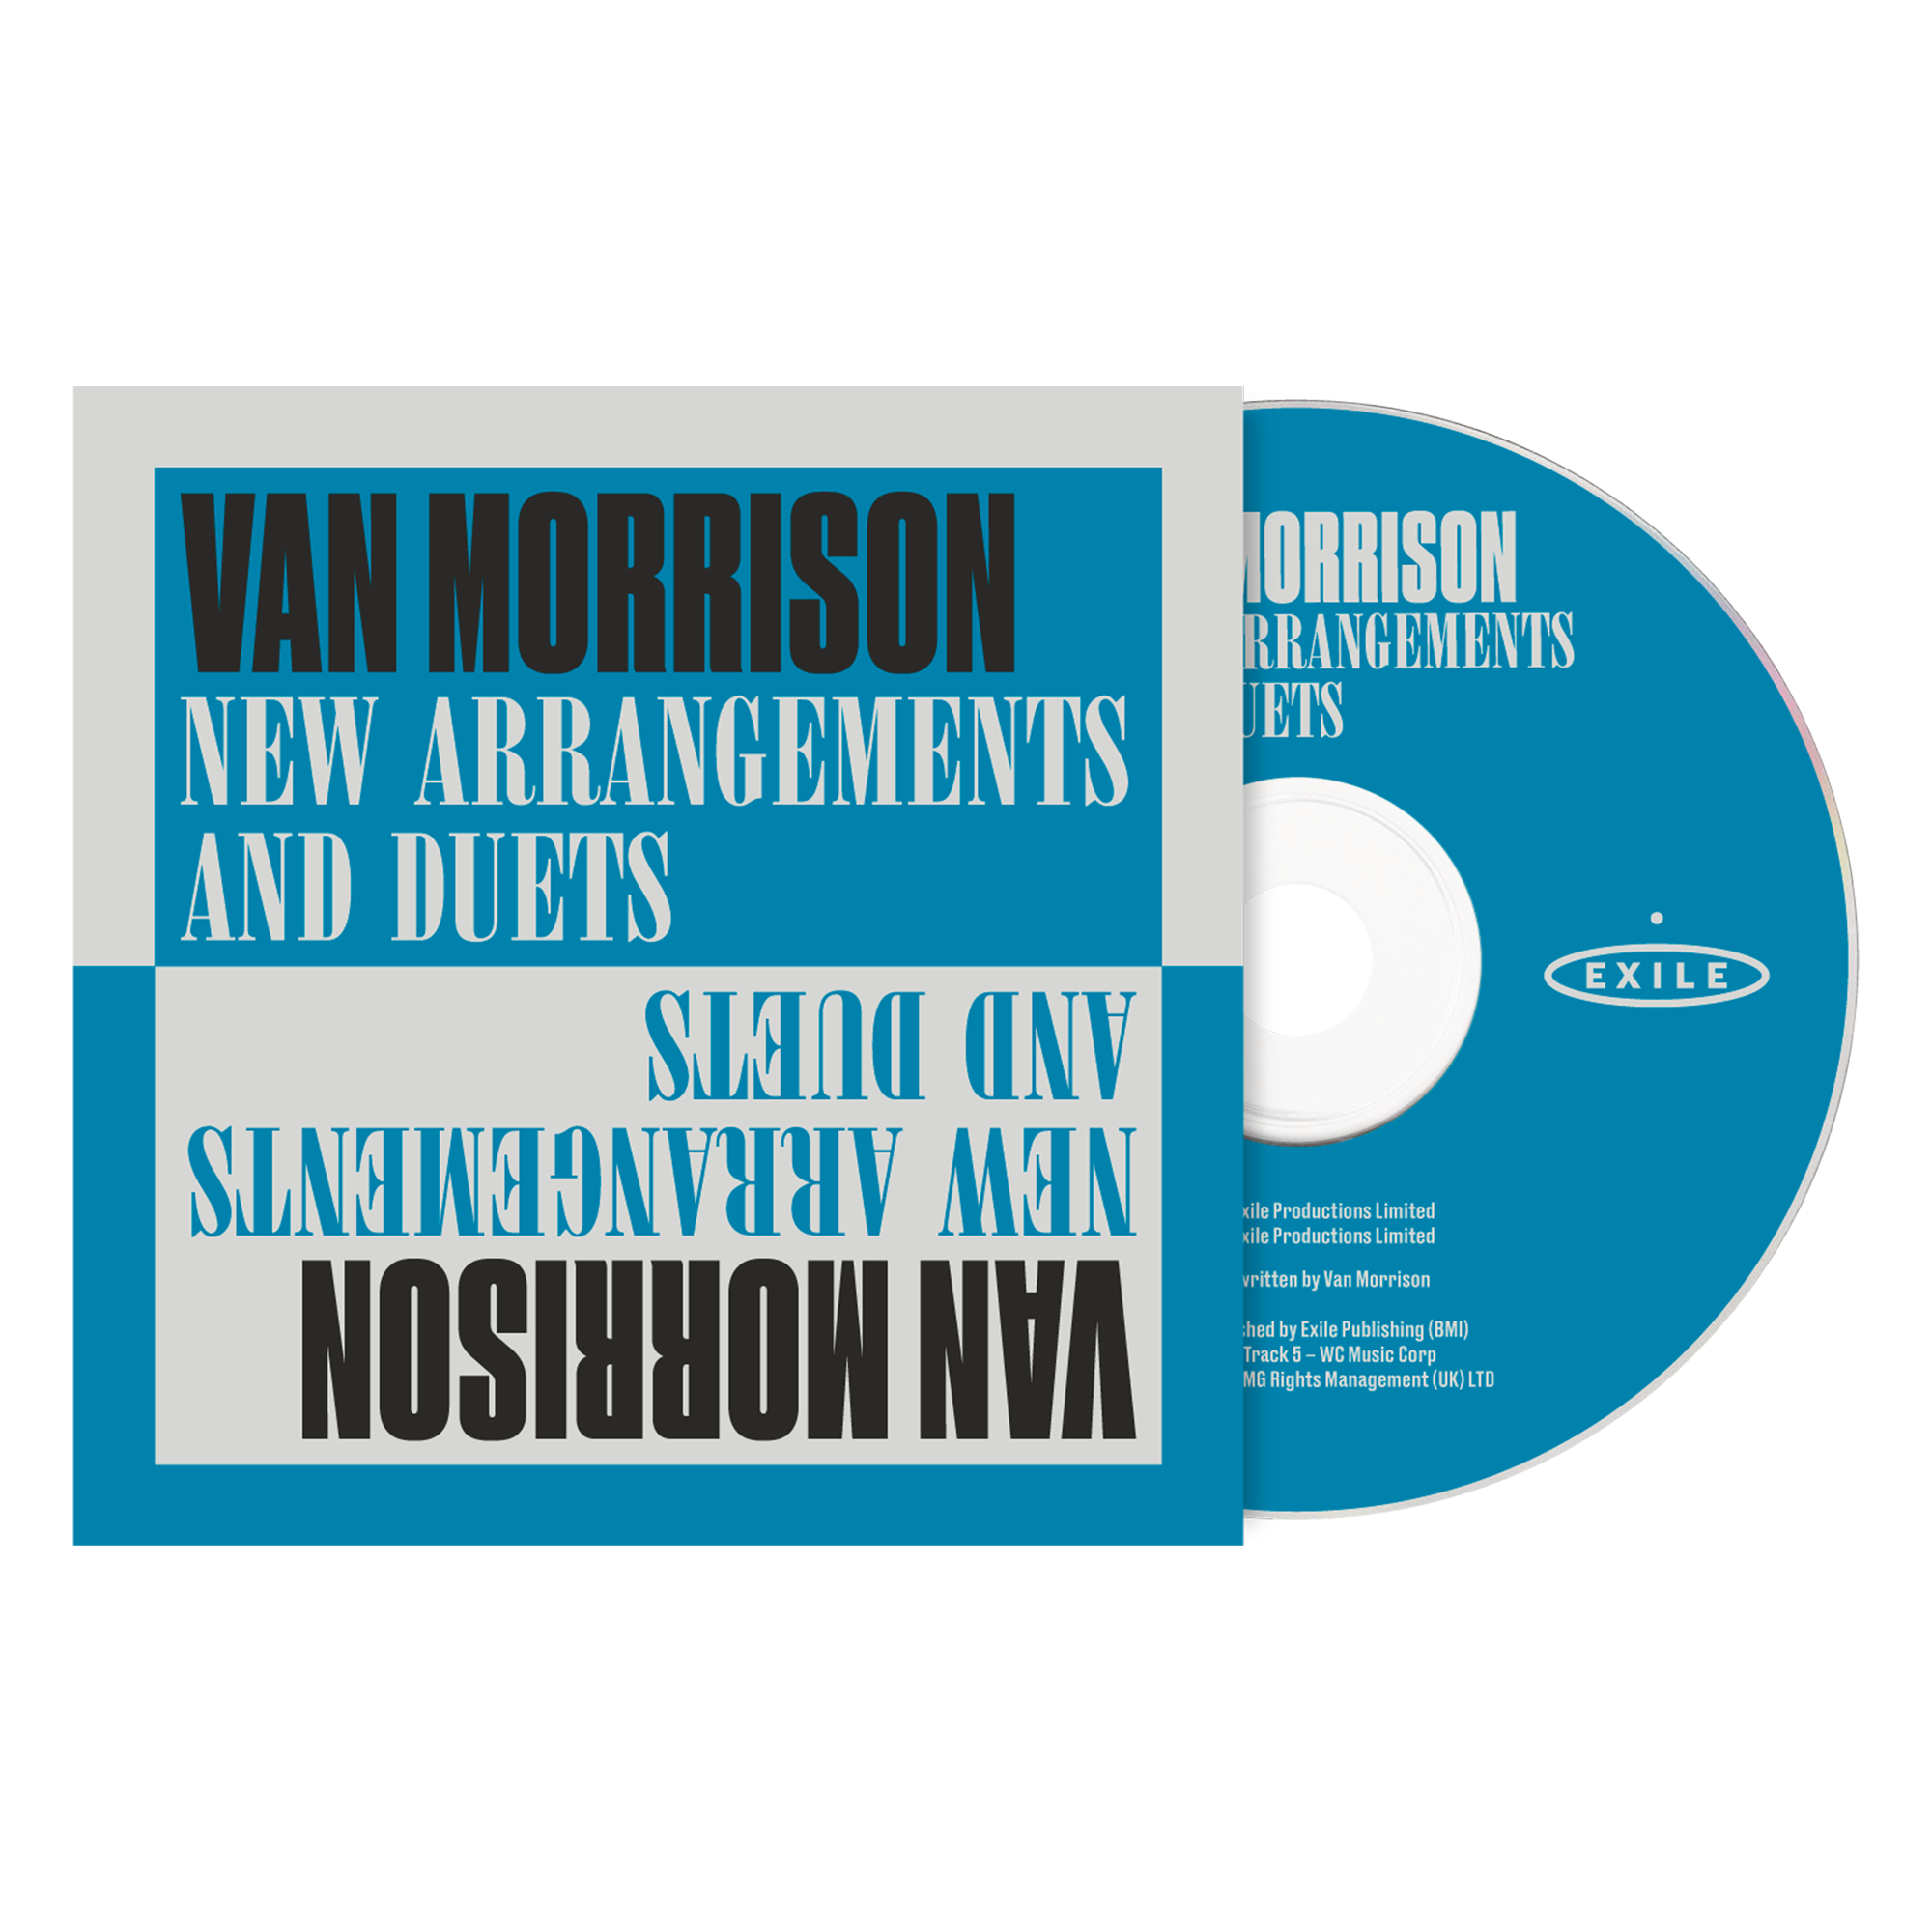 New Arrangements And Duets: Limited Orange Vinyl LP, CD + Signed Print